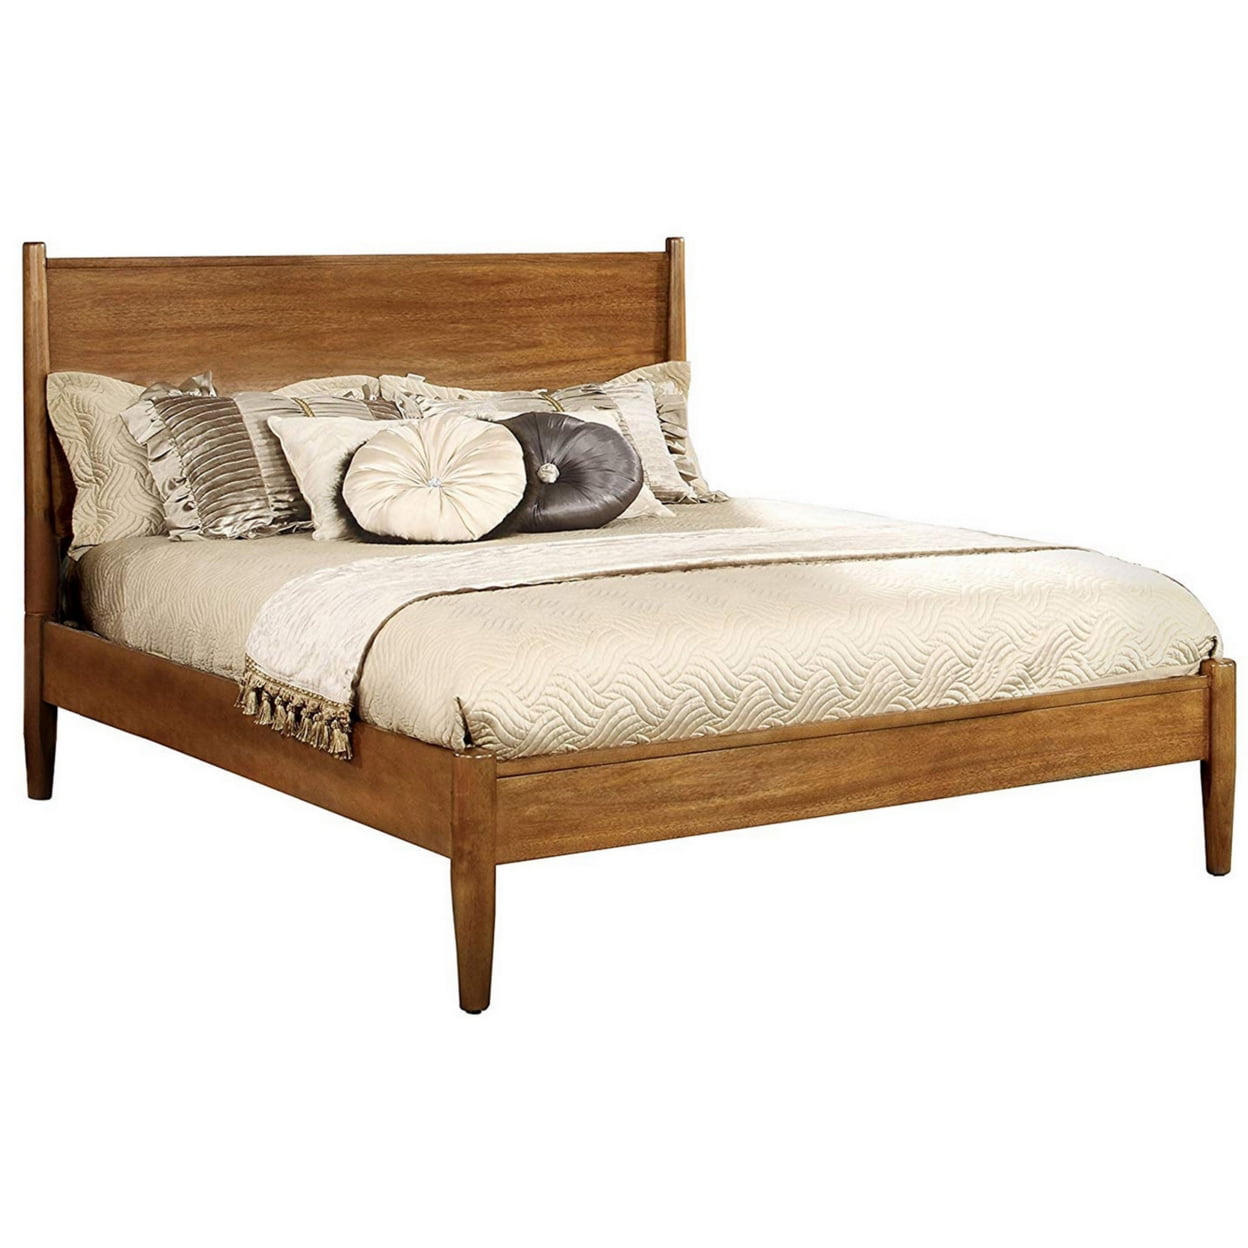 BM217638 Wooden California Bed with Panel Headboard, Oak Brown - King Size -  Benjara